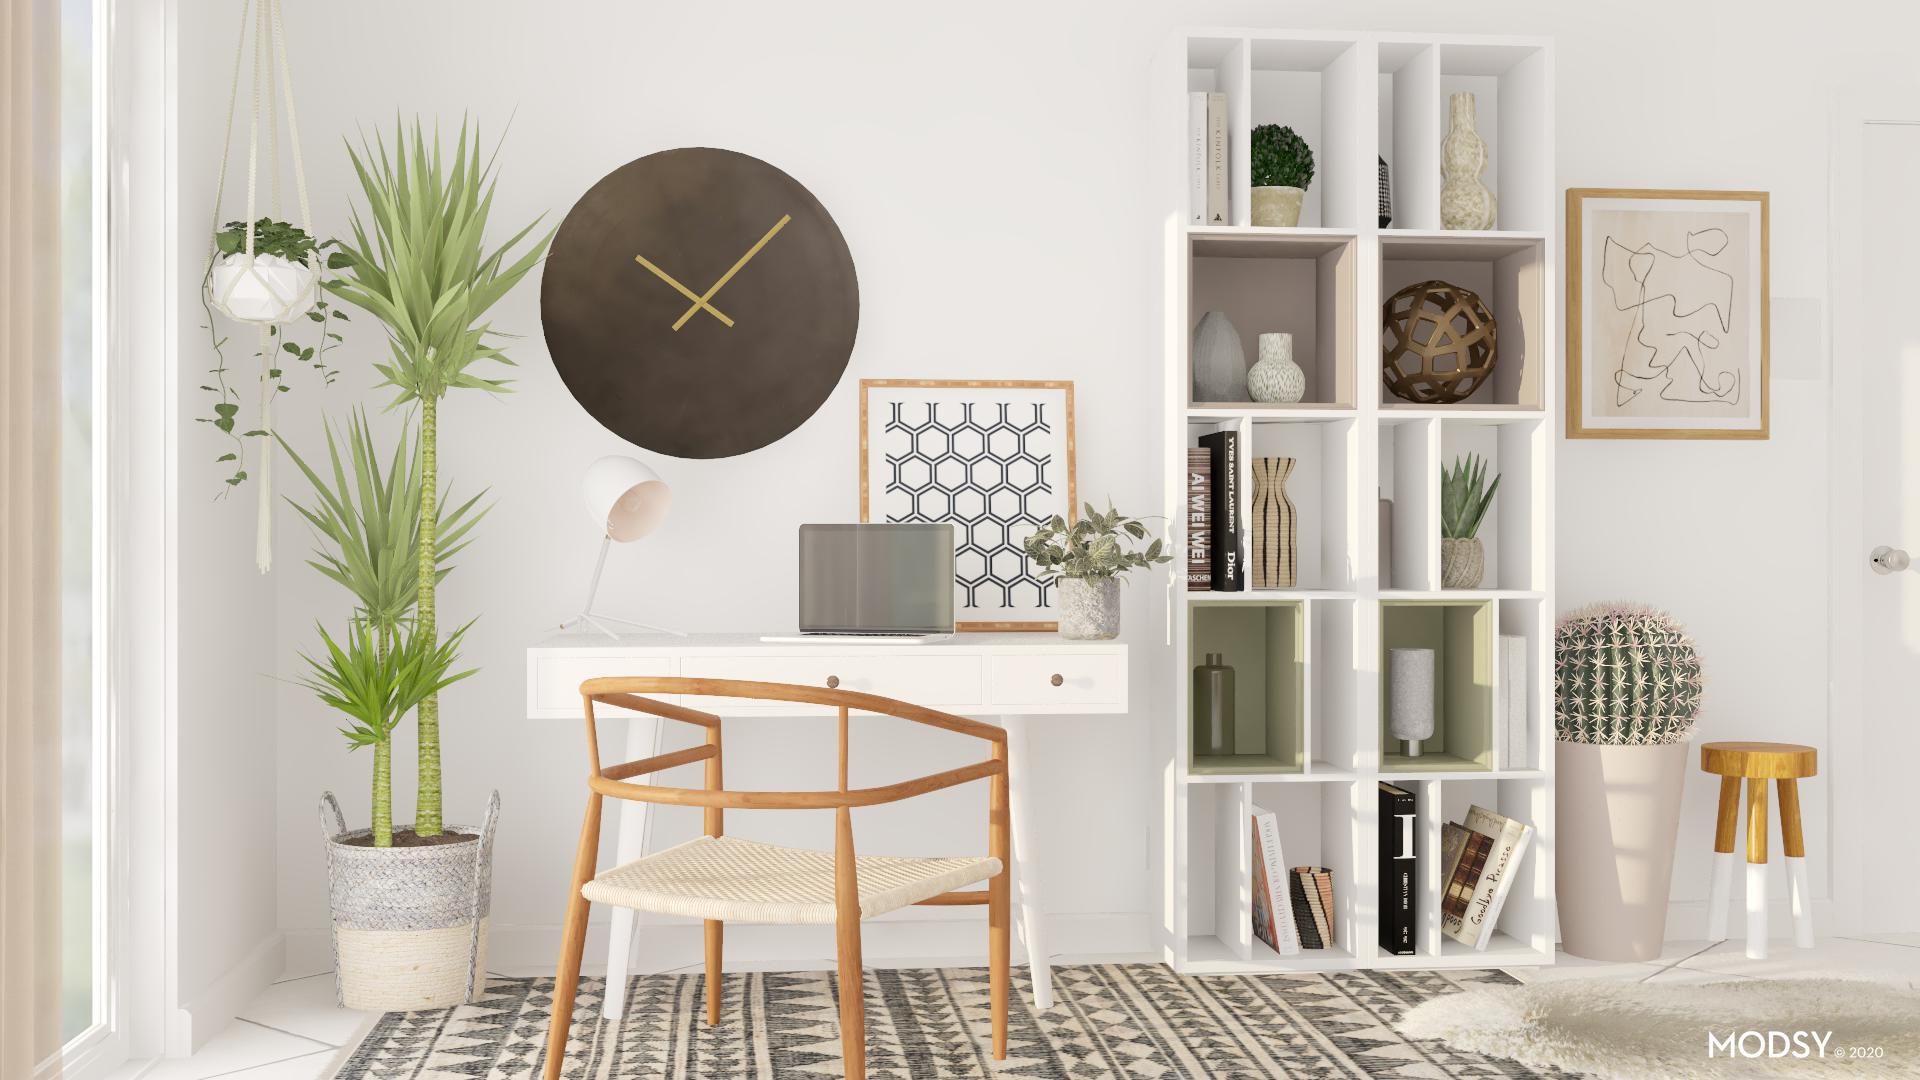 7 Minimalist Home Office Design Ideas For Maximum Productivity